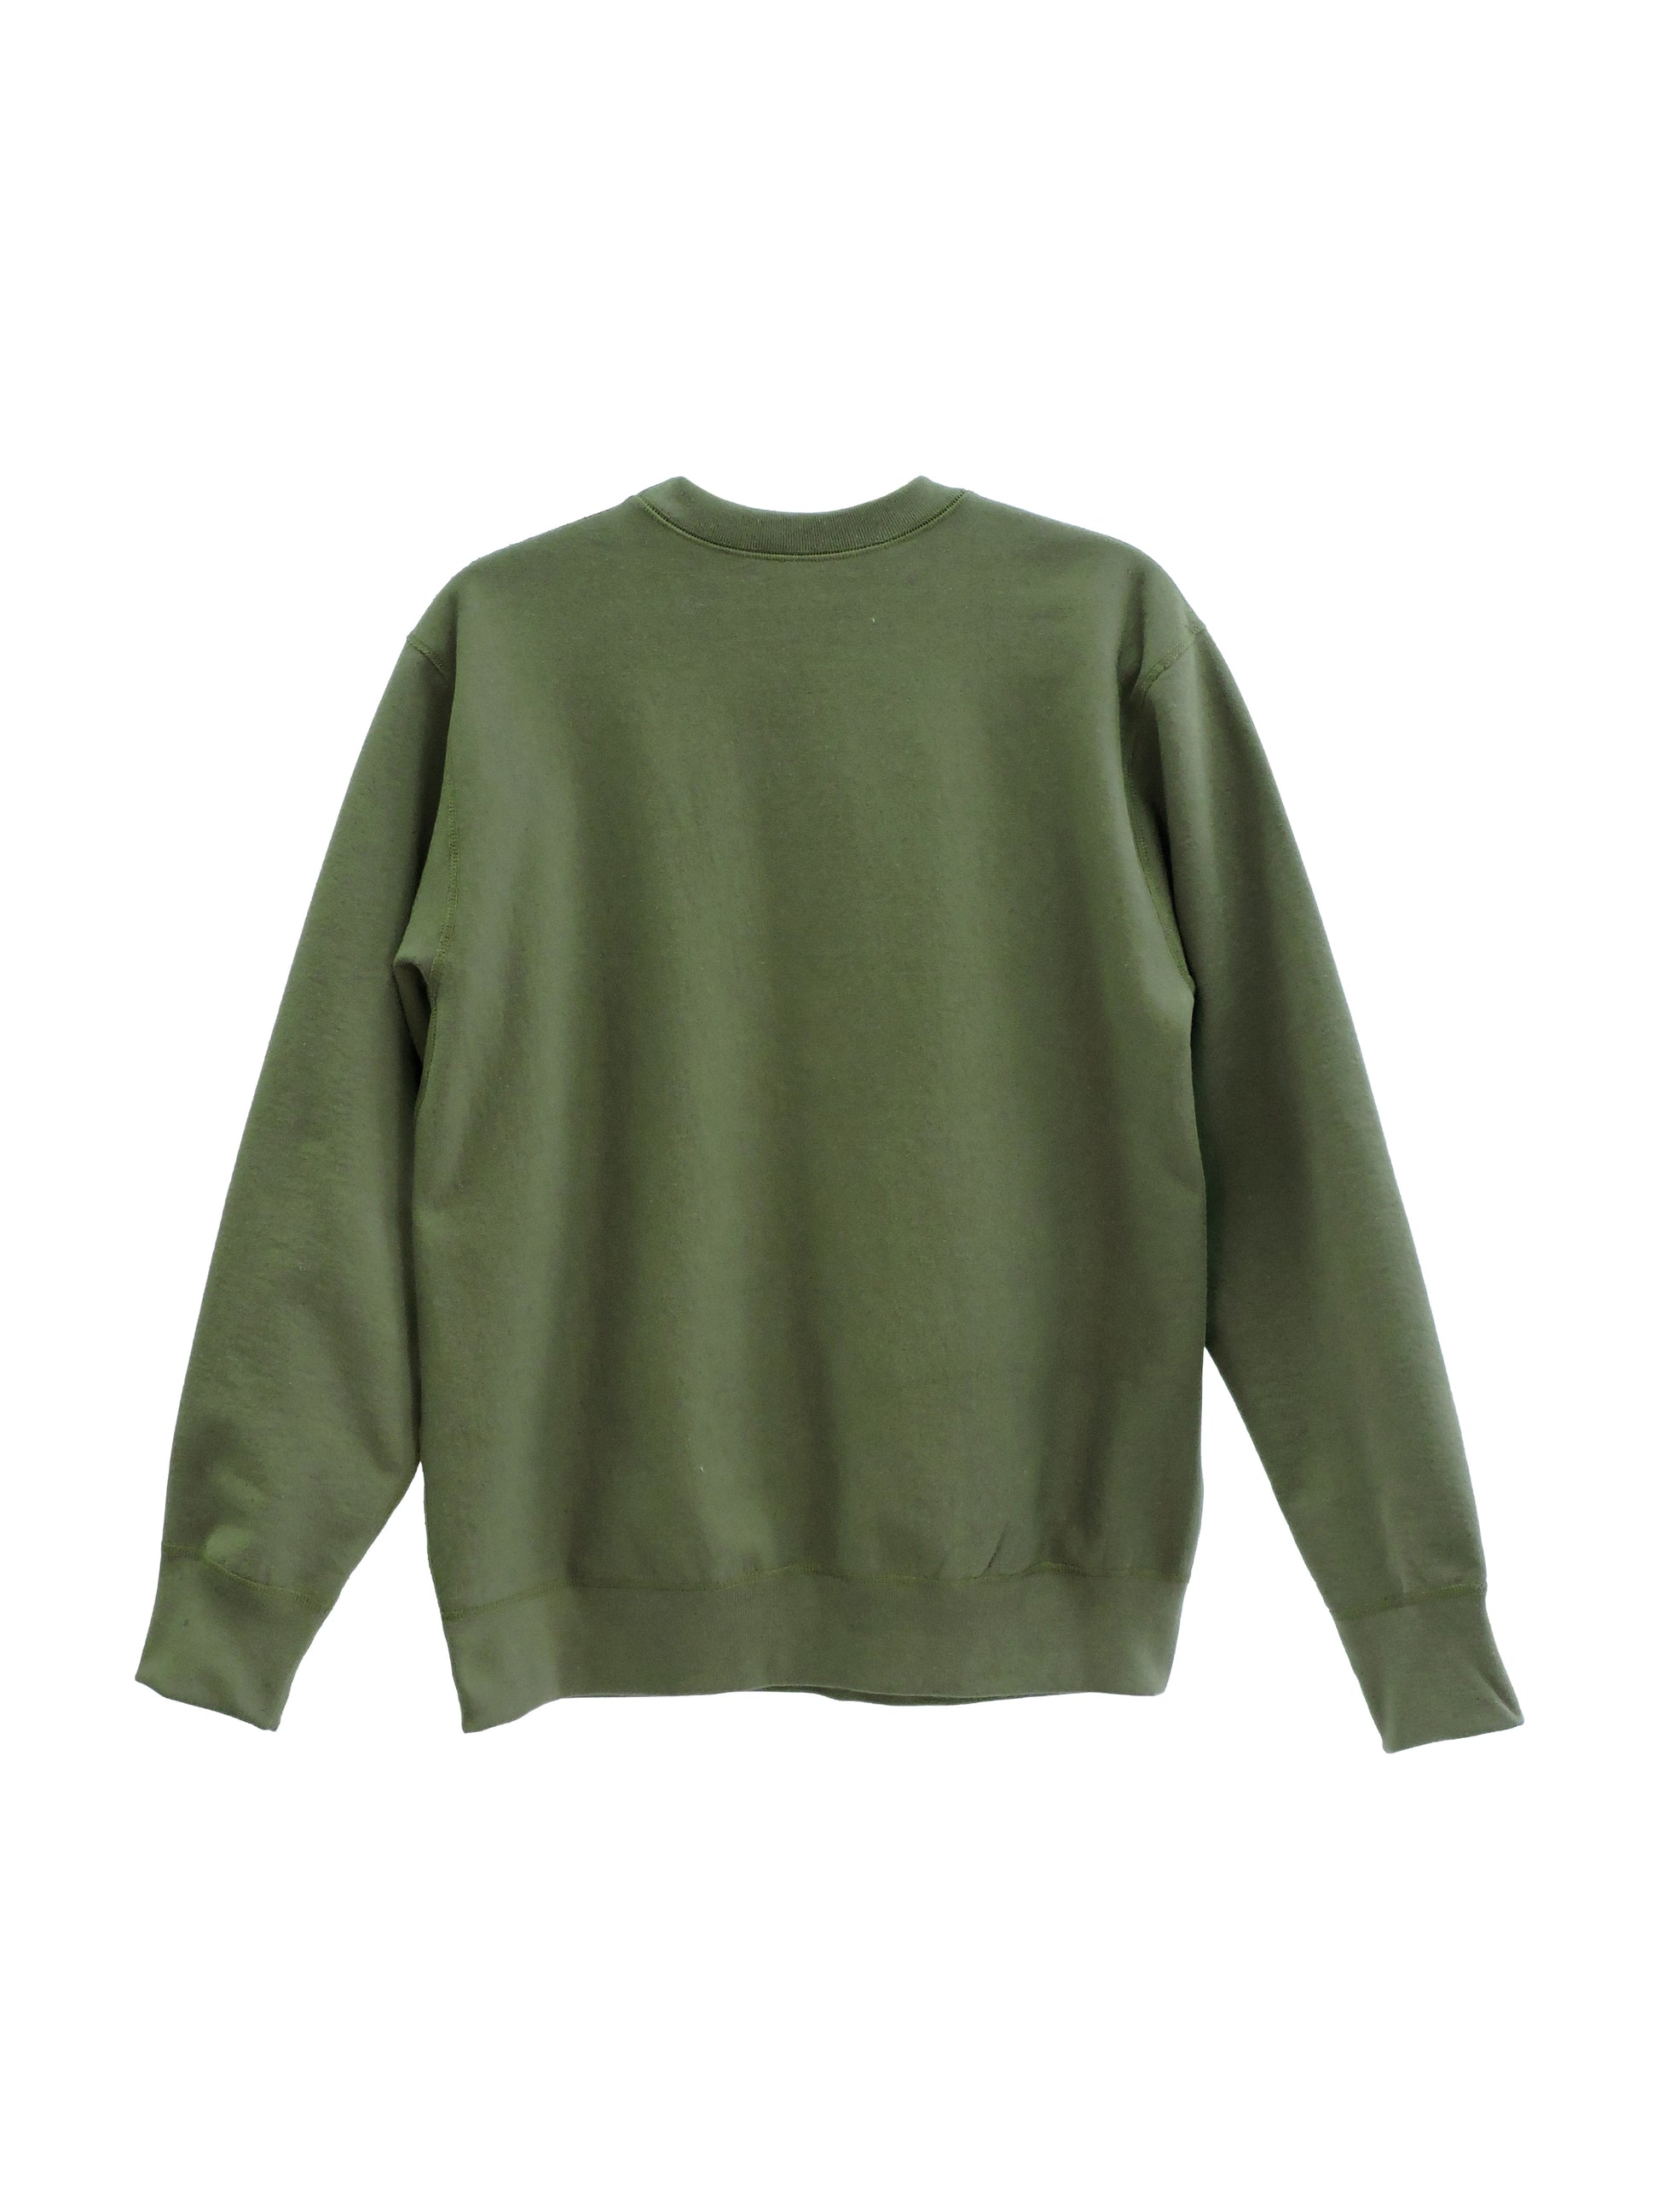 Main Crewneck Sweater - Olive Green Heavy Fleece